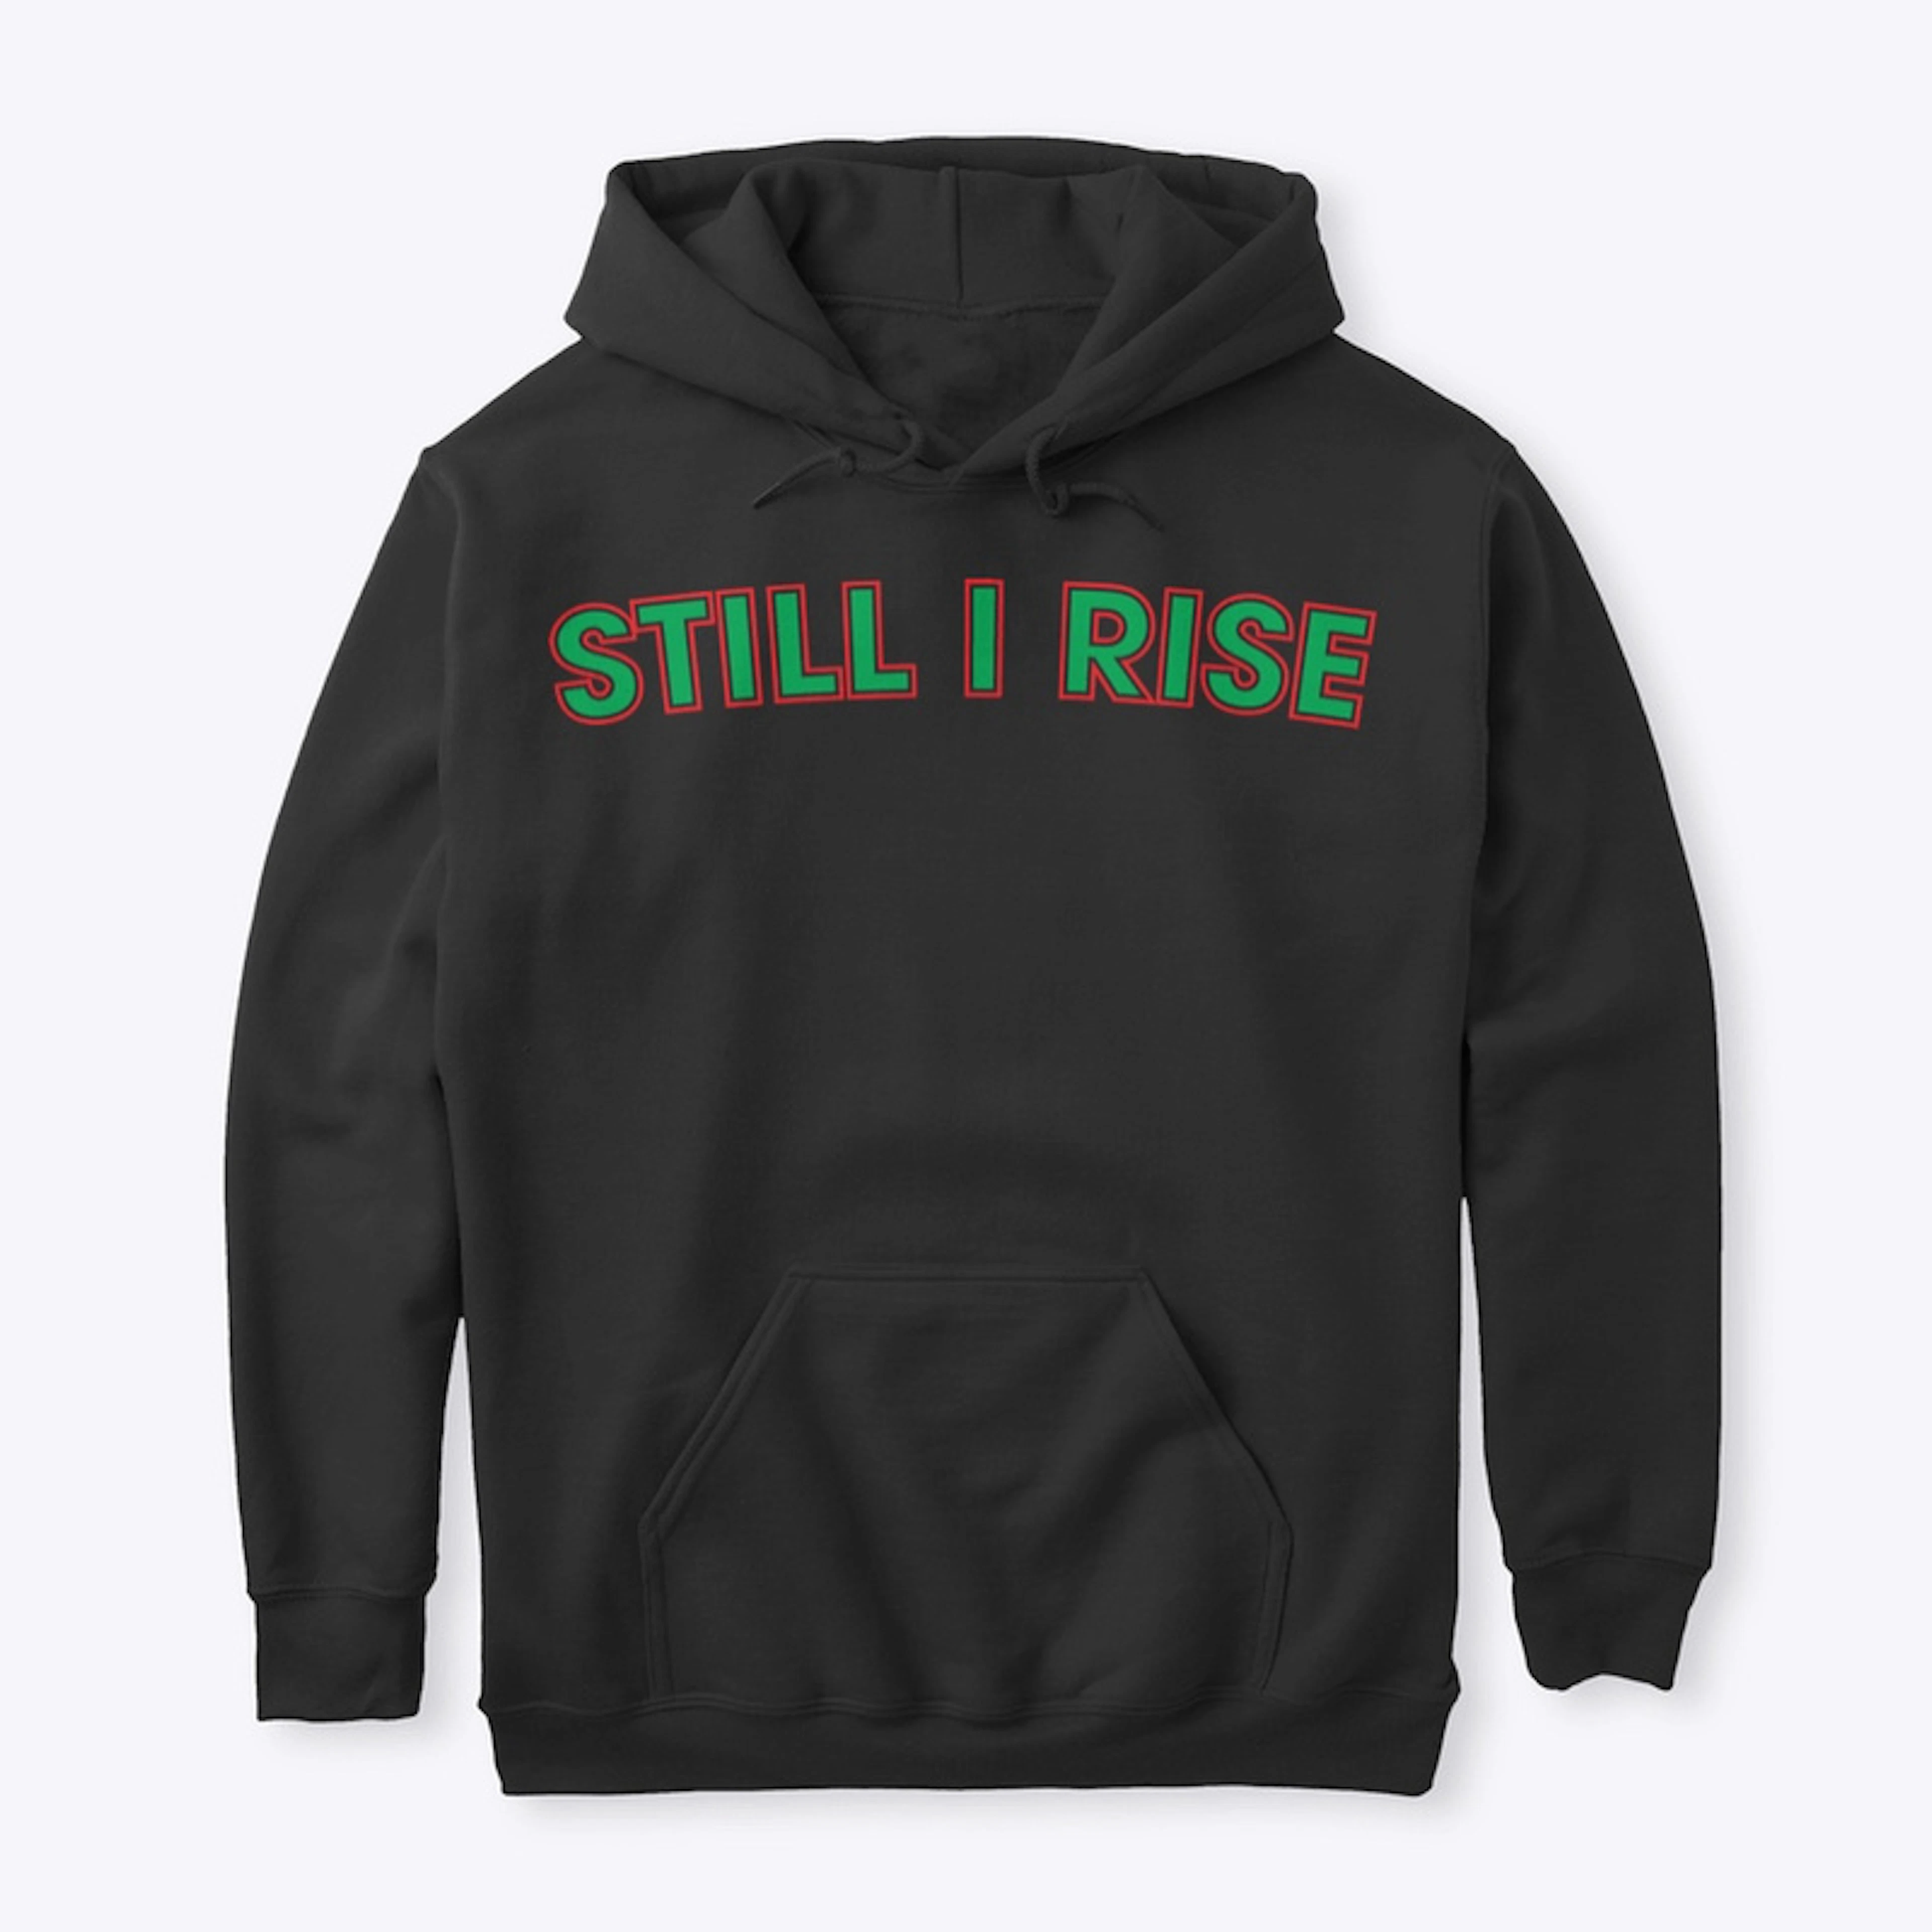 Still I Rise women